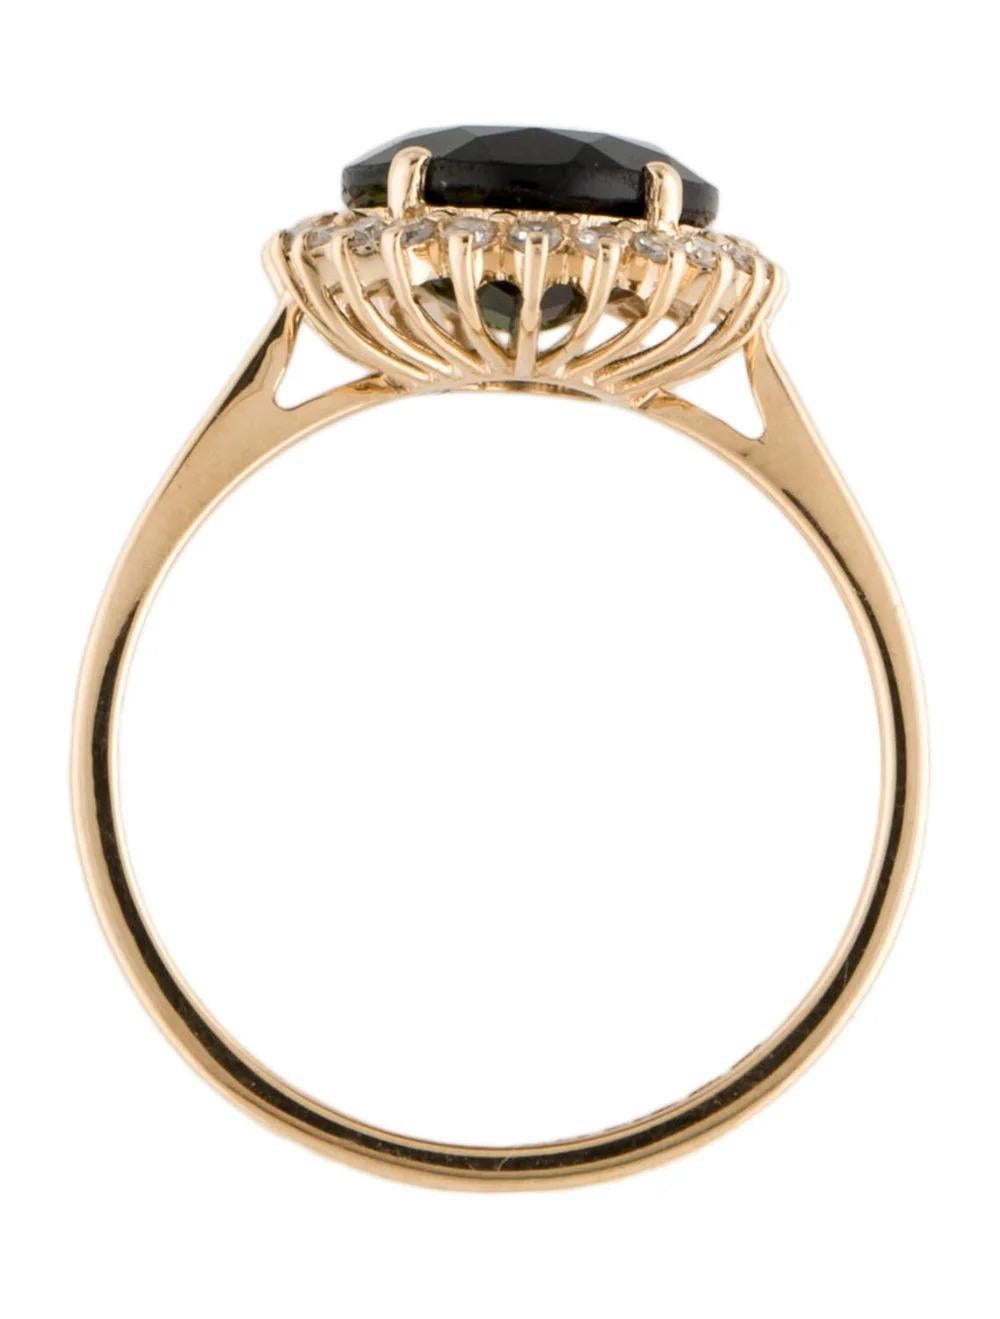 Women's 14K 3.42ctw Tourmaline Diamond Cocktail Ring Size 7.25 Yellow Gold Vintage For Sale